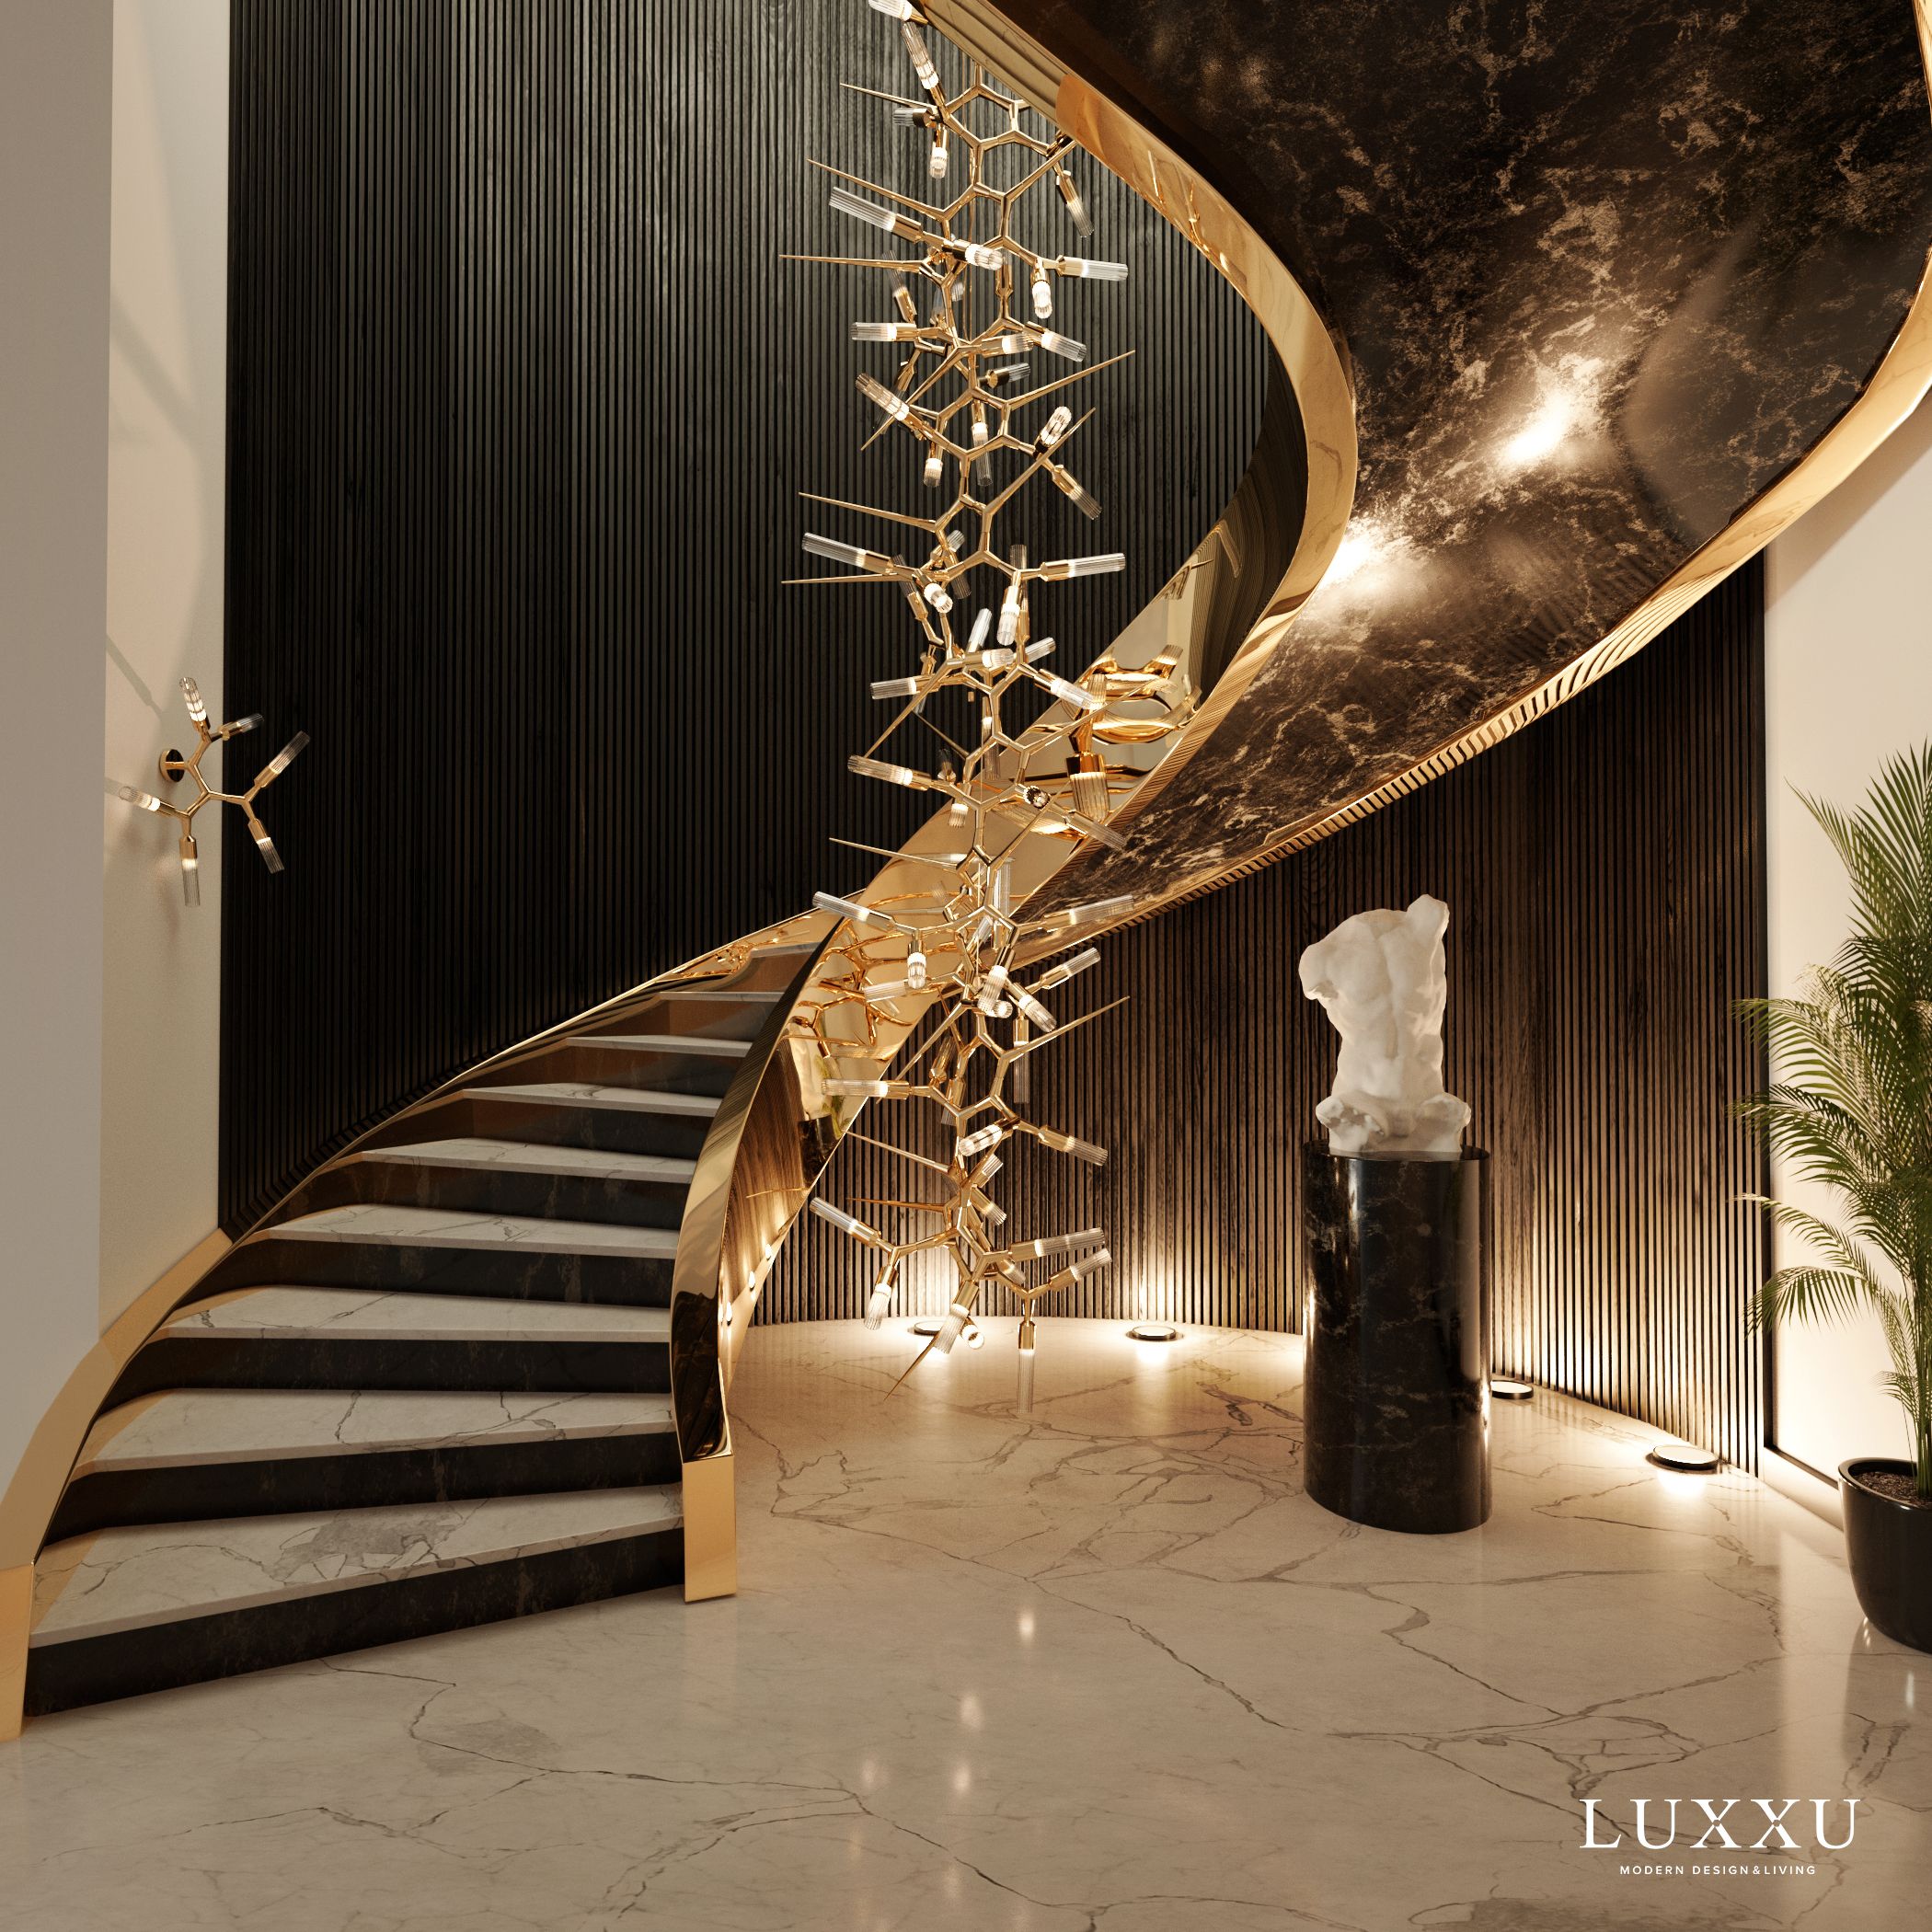 LUXXU Massive Chandeliers: A Selection Of Grandeur